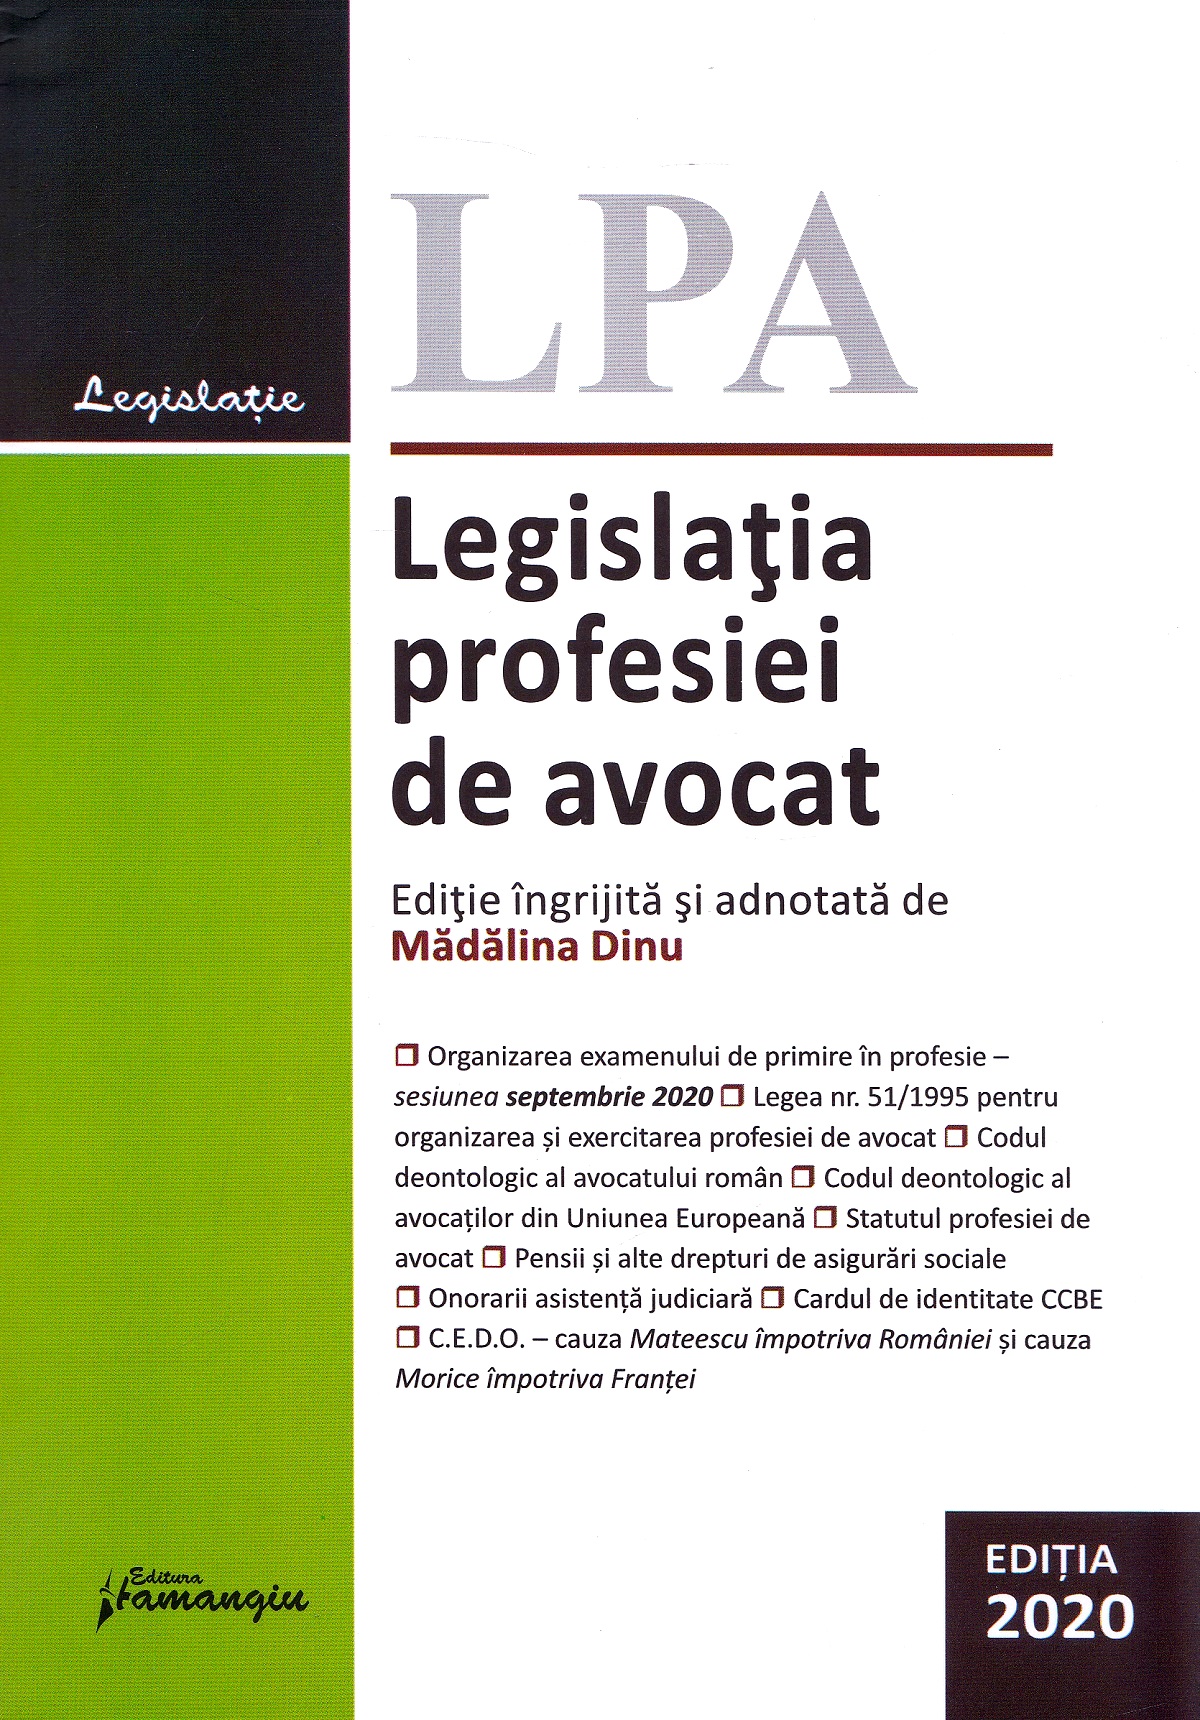 Legislatia profesiei de avocat Ed.2020